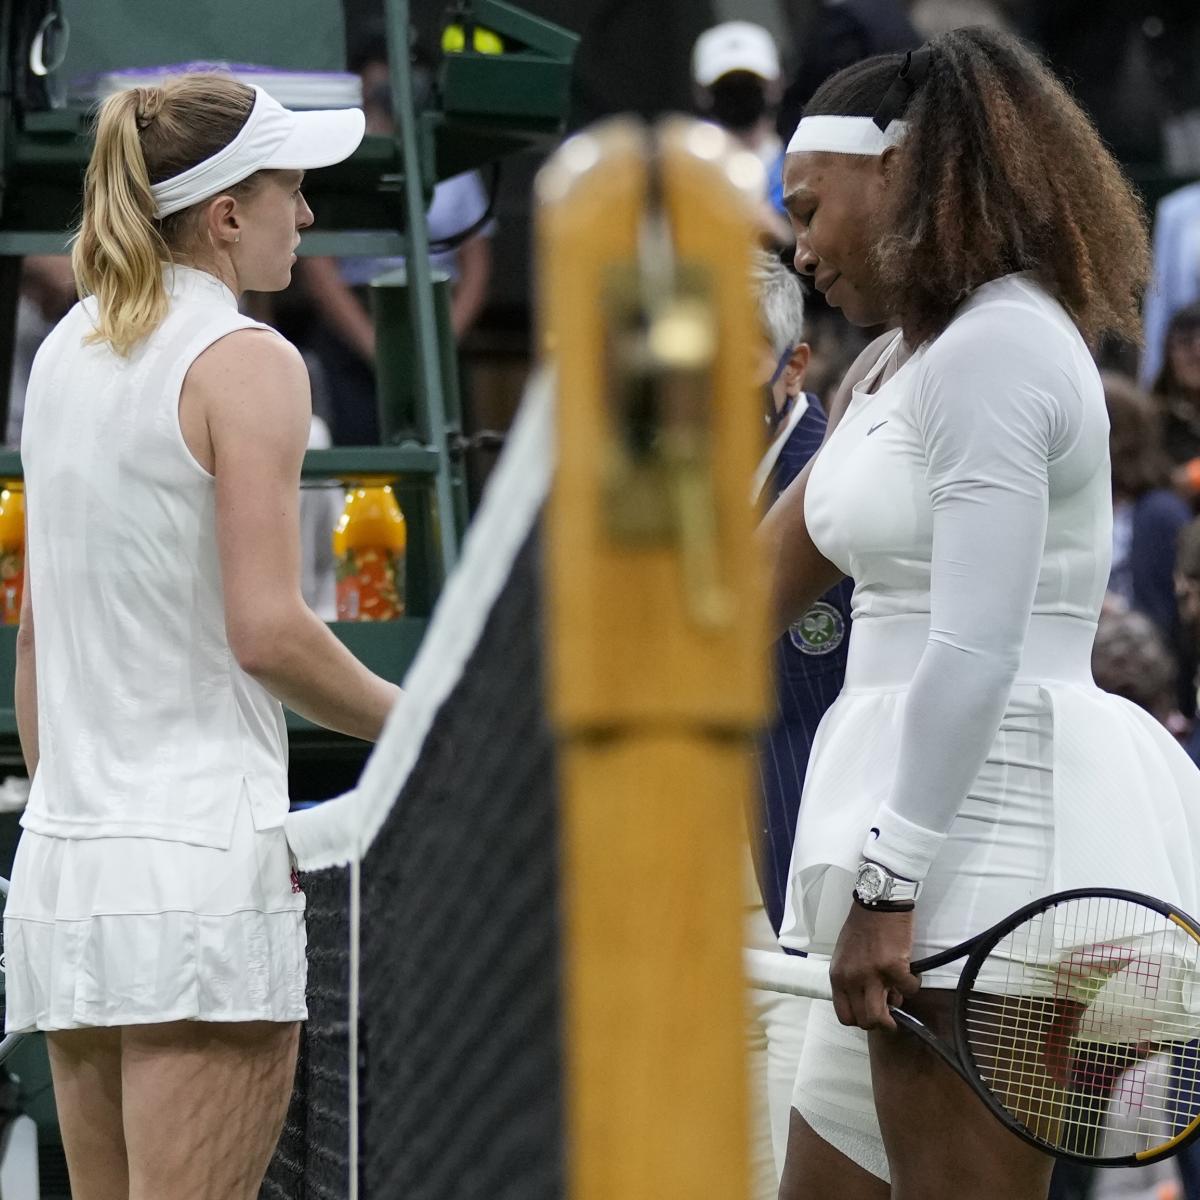 Wimbledon 2021: Serena Williams' Injury, Federer's Win Headline Tuesday Results